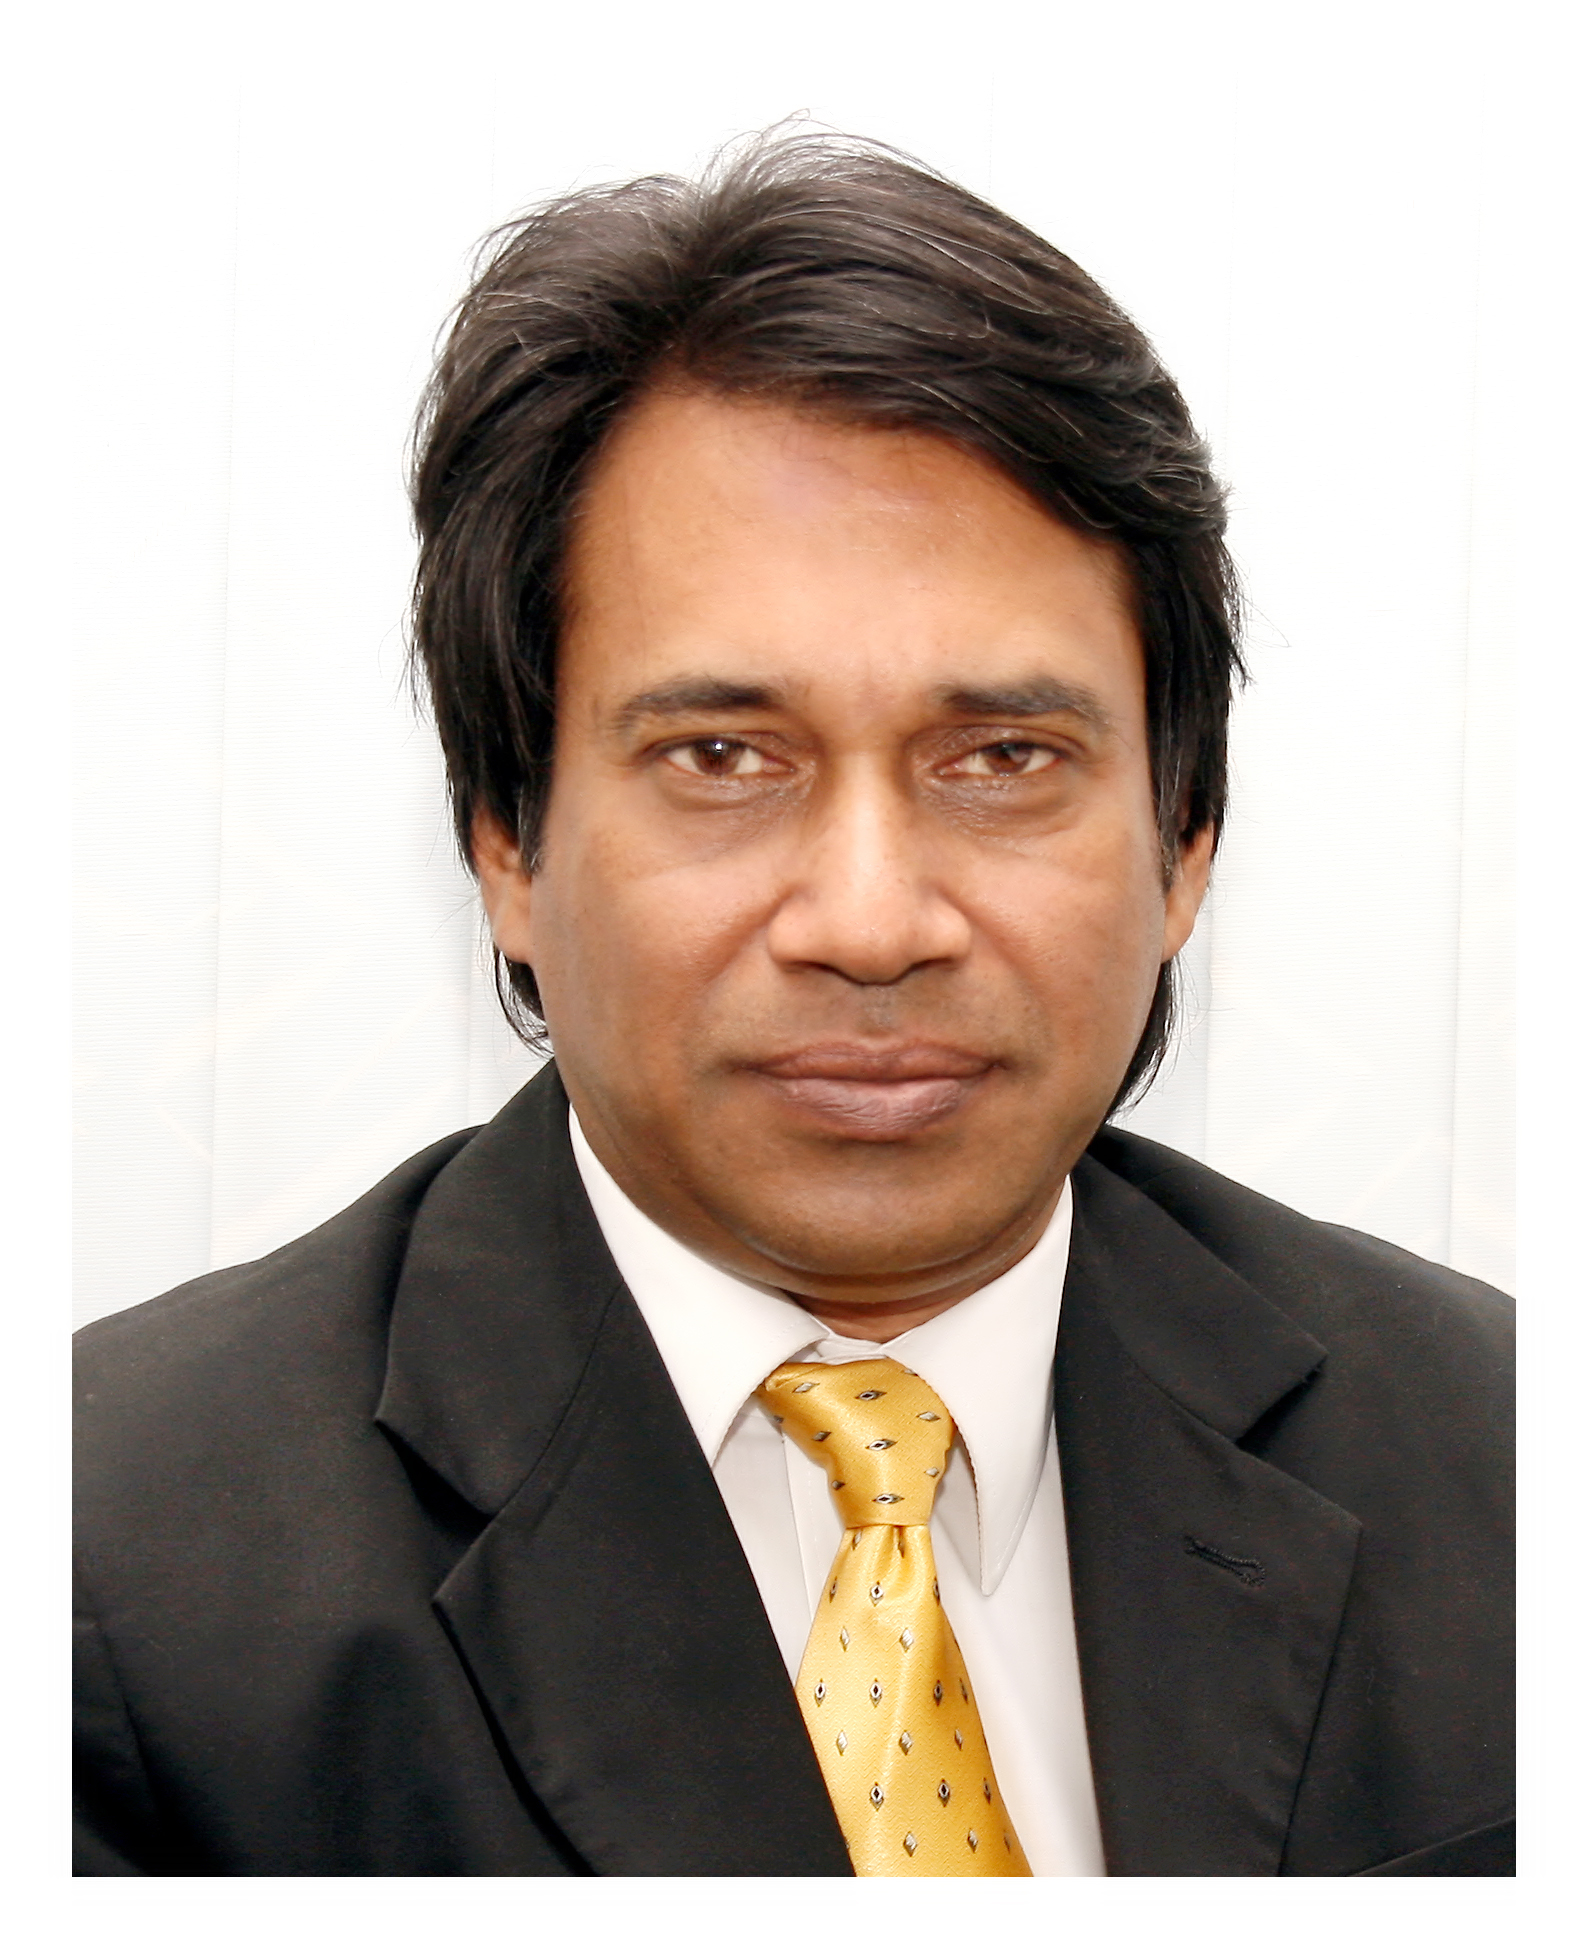 Dr. Farhad Kamal, Executive Director